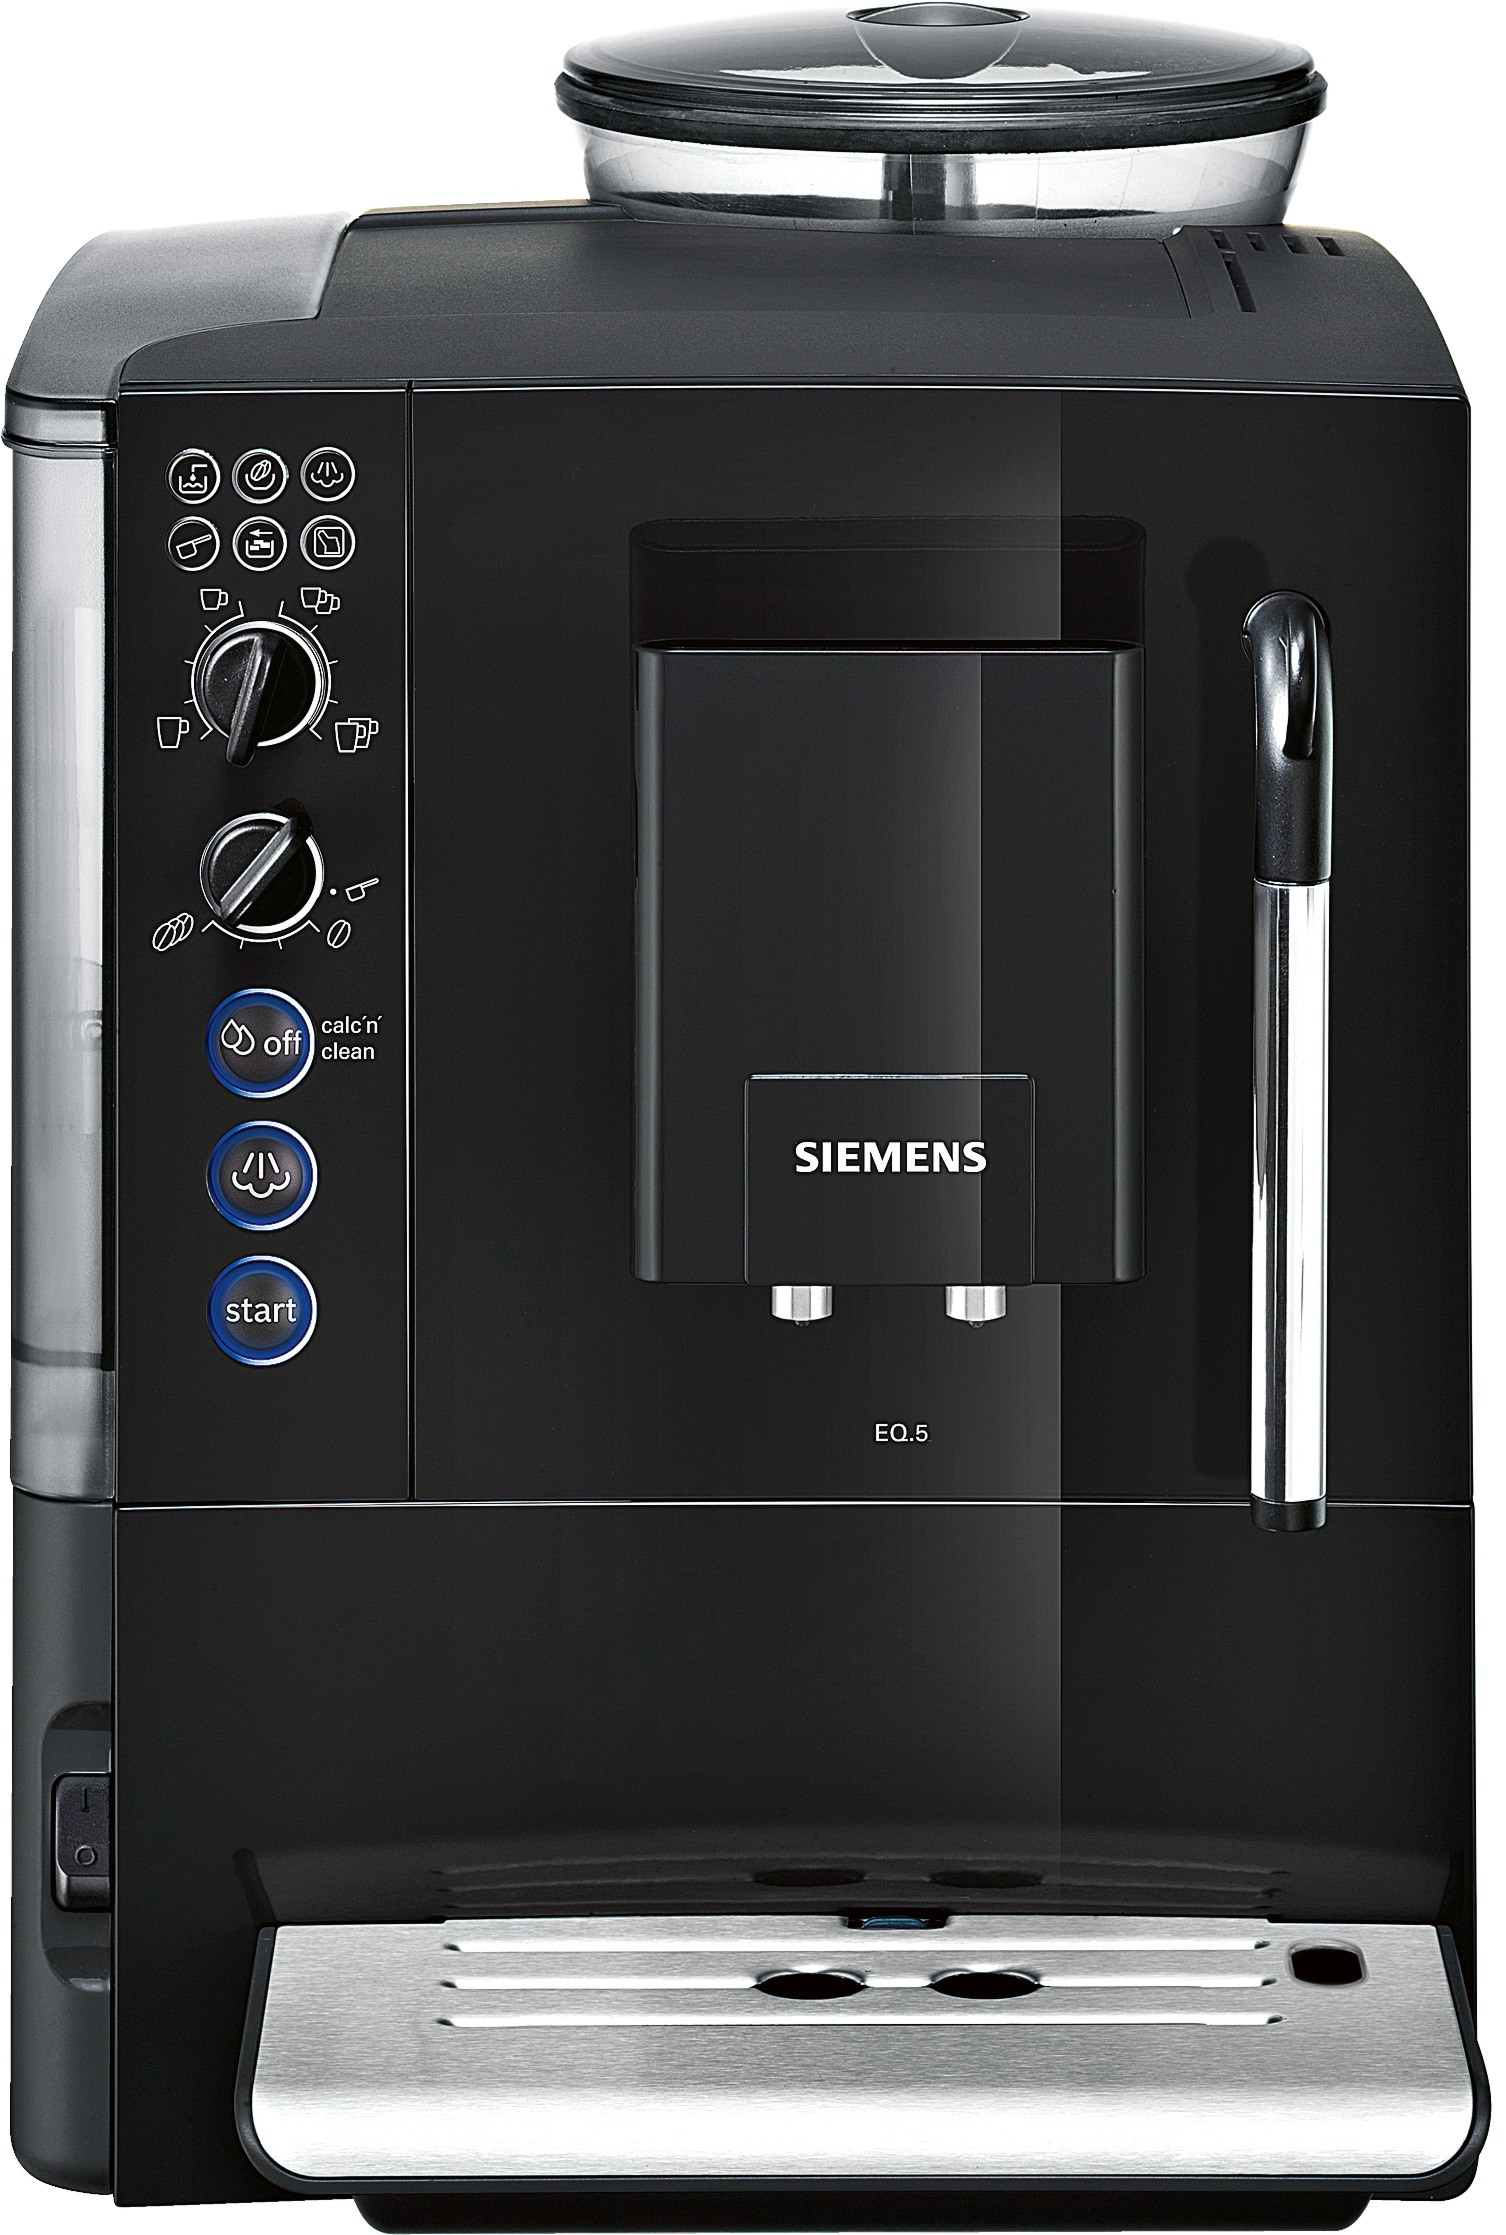 Image of Siemens espressoautomaat EQ.5 TE501205RW